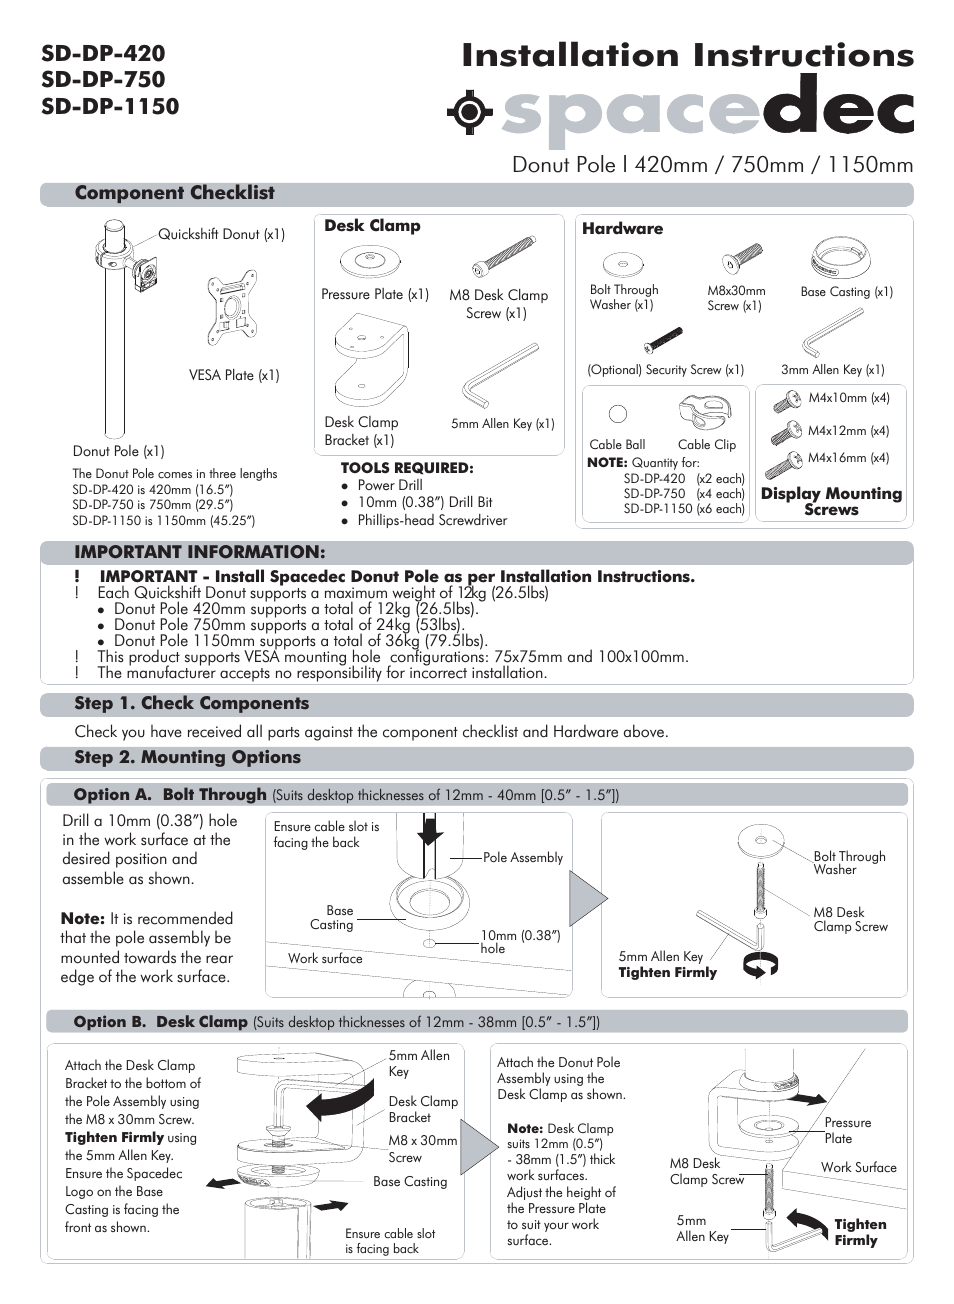 Spacedec SD-DP-420 Installation manual